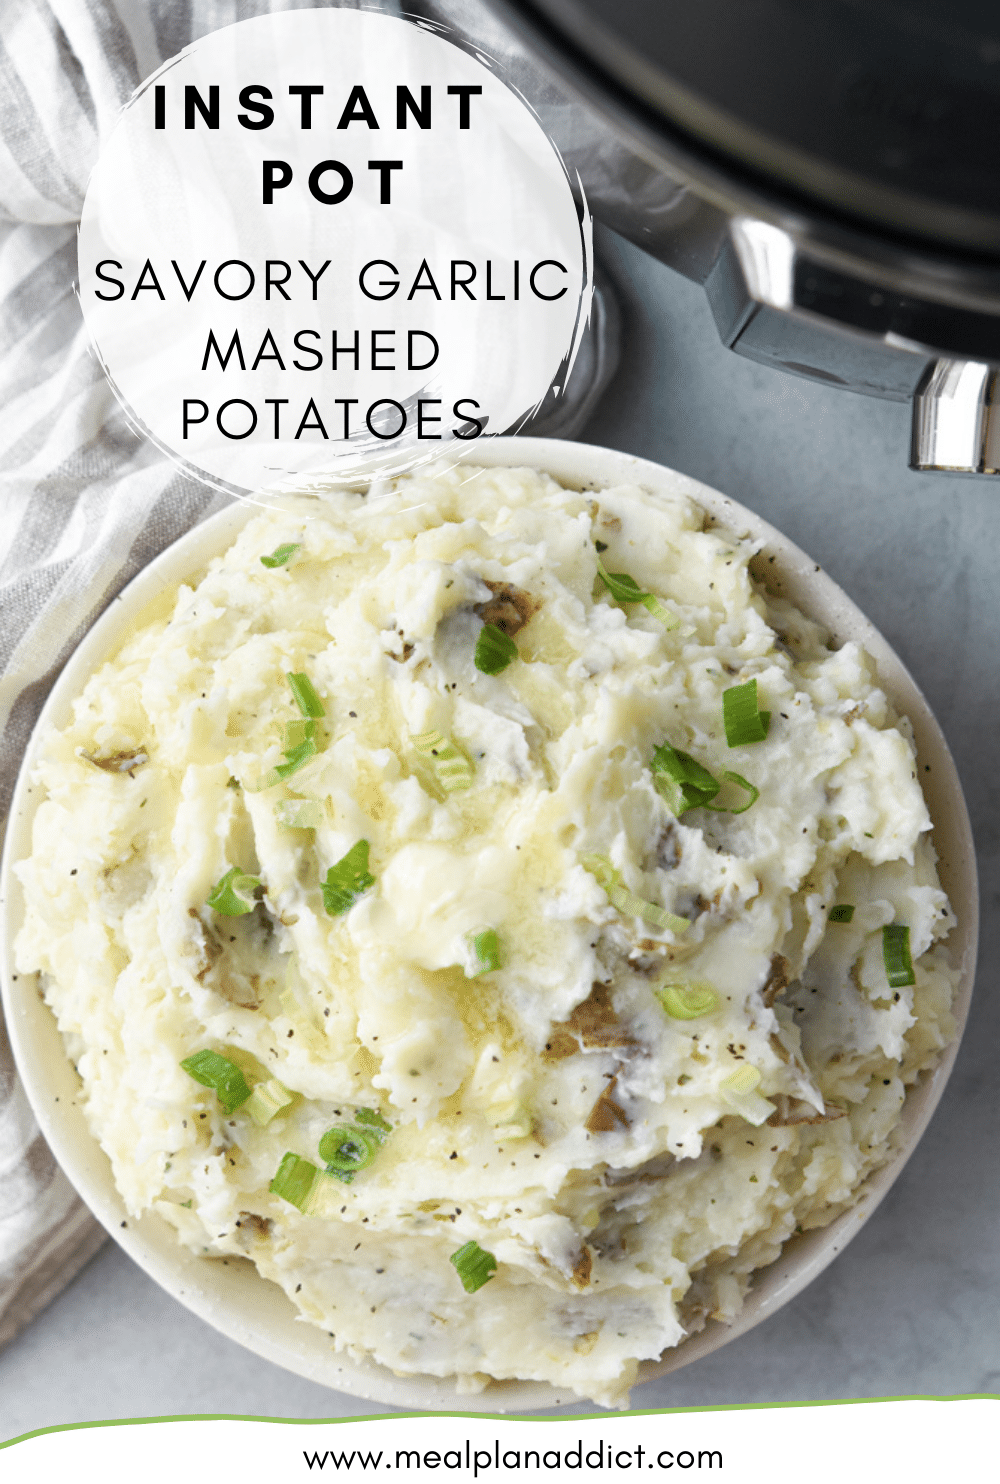 Instant Pot Savory Garlic Mashed Potatoes